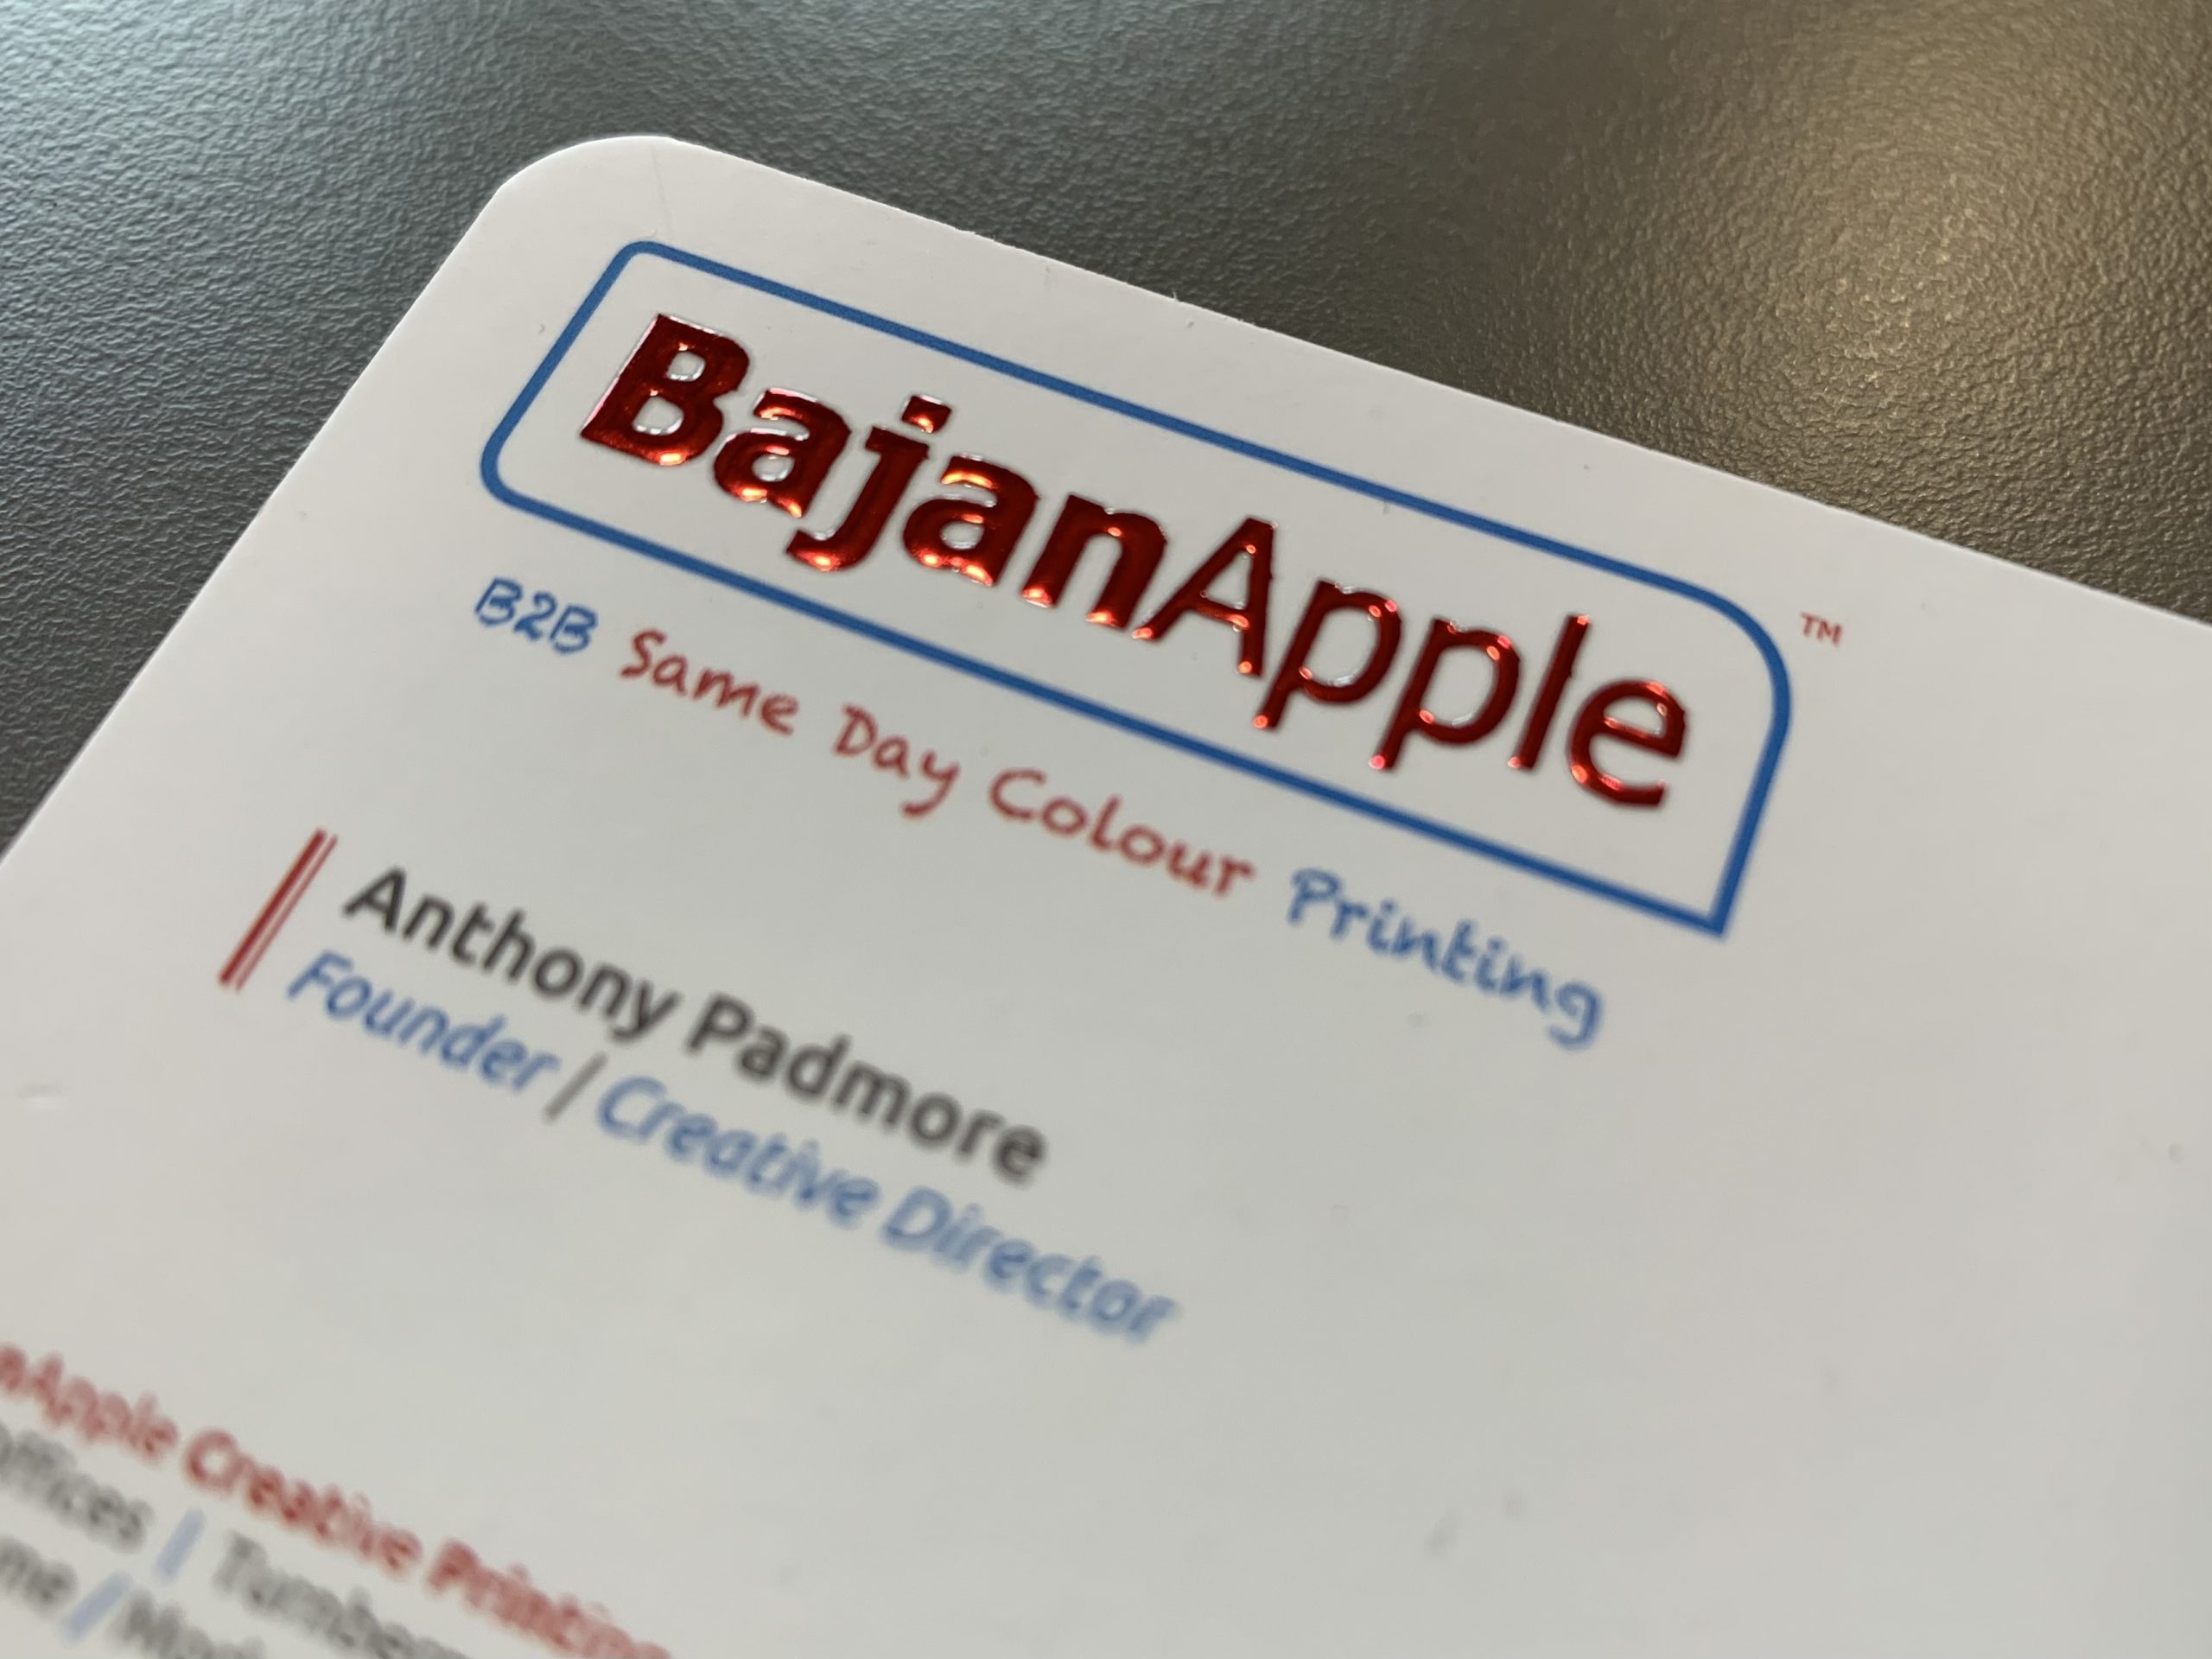 BajanApple Digital Colour Printing